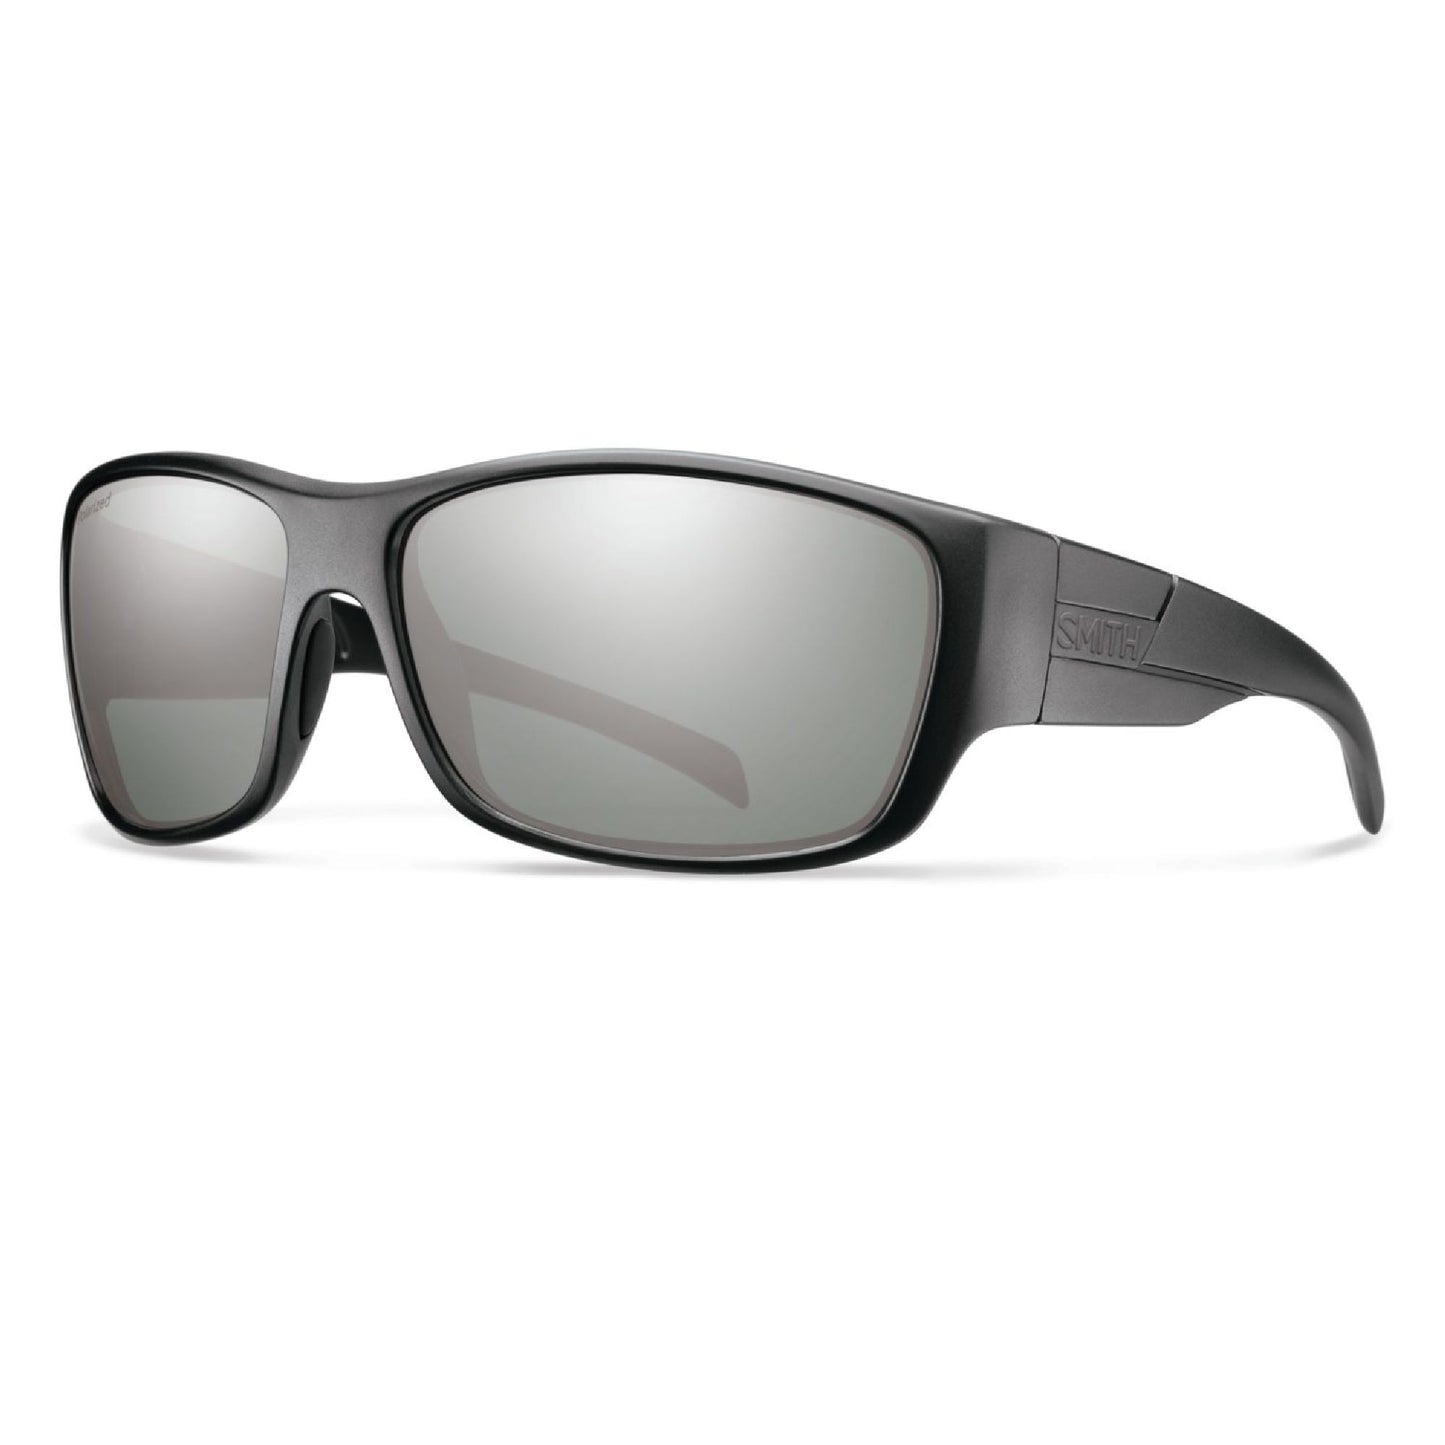 Smith Frontman Elite Sunglasses Black Polarized Gray - Smith Sunglasses